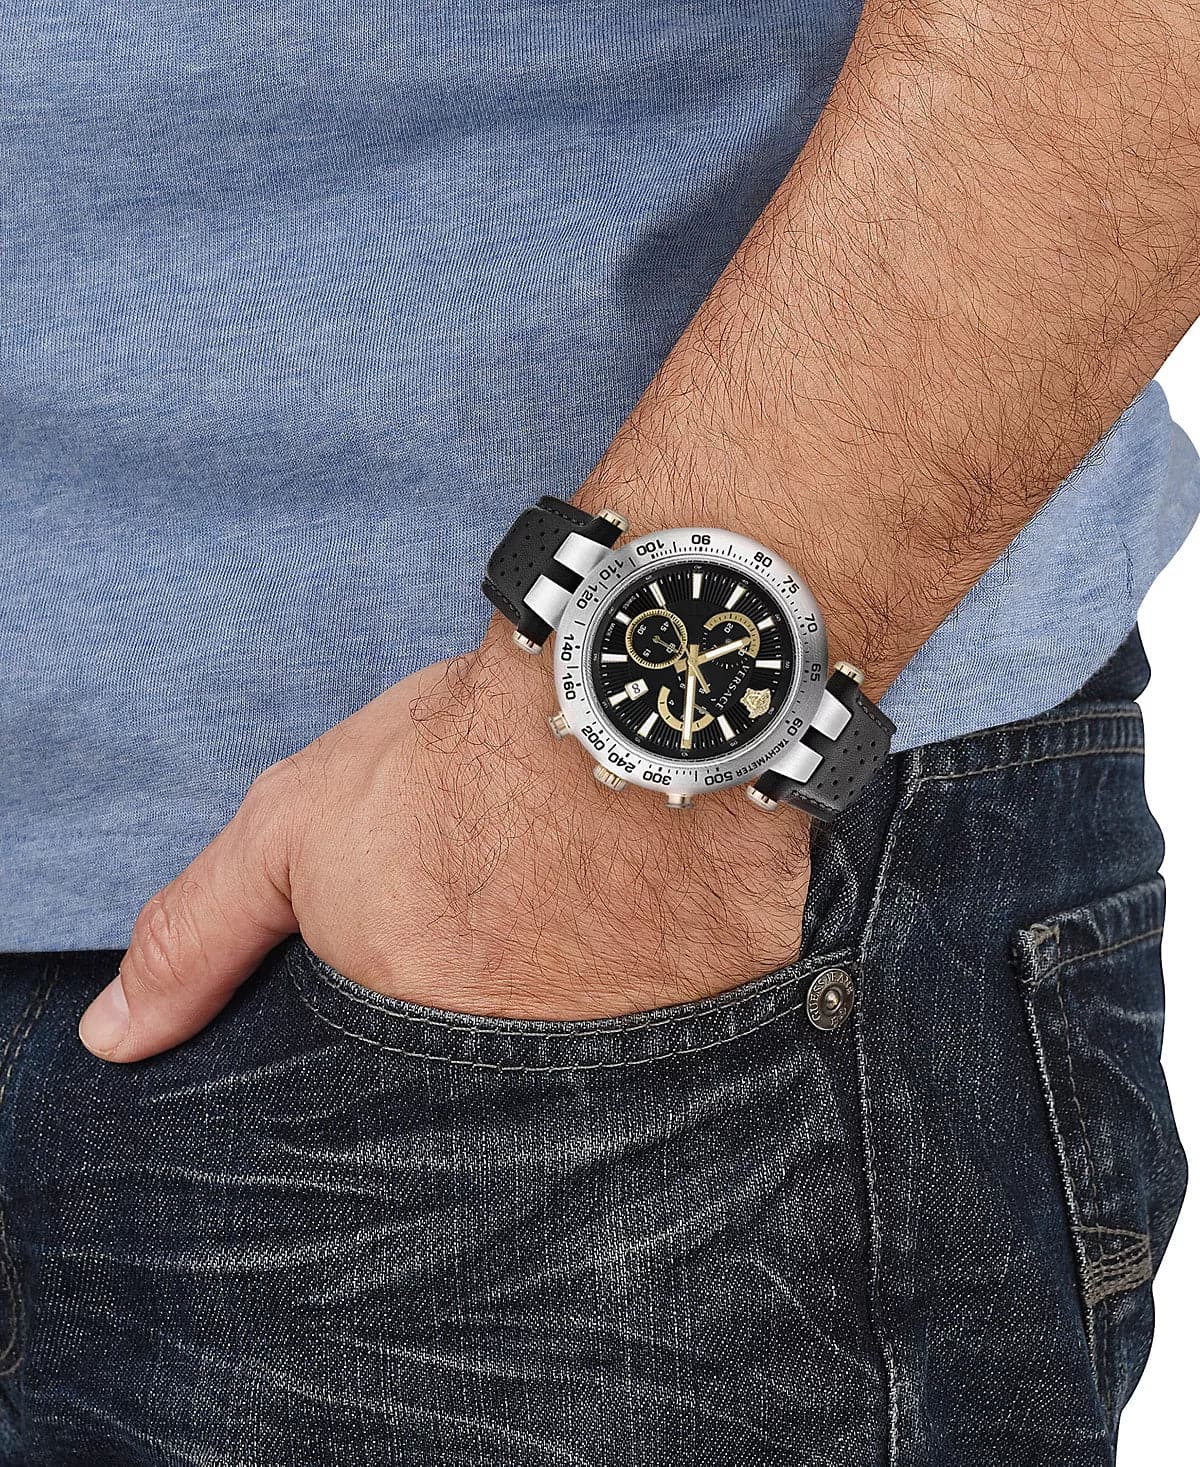 Versace Sport Tech Collection Luxury Mens Watch Timepiece